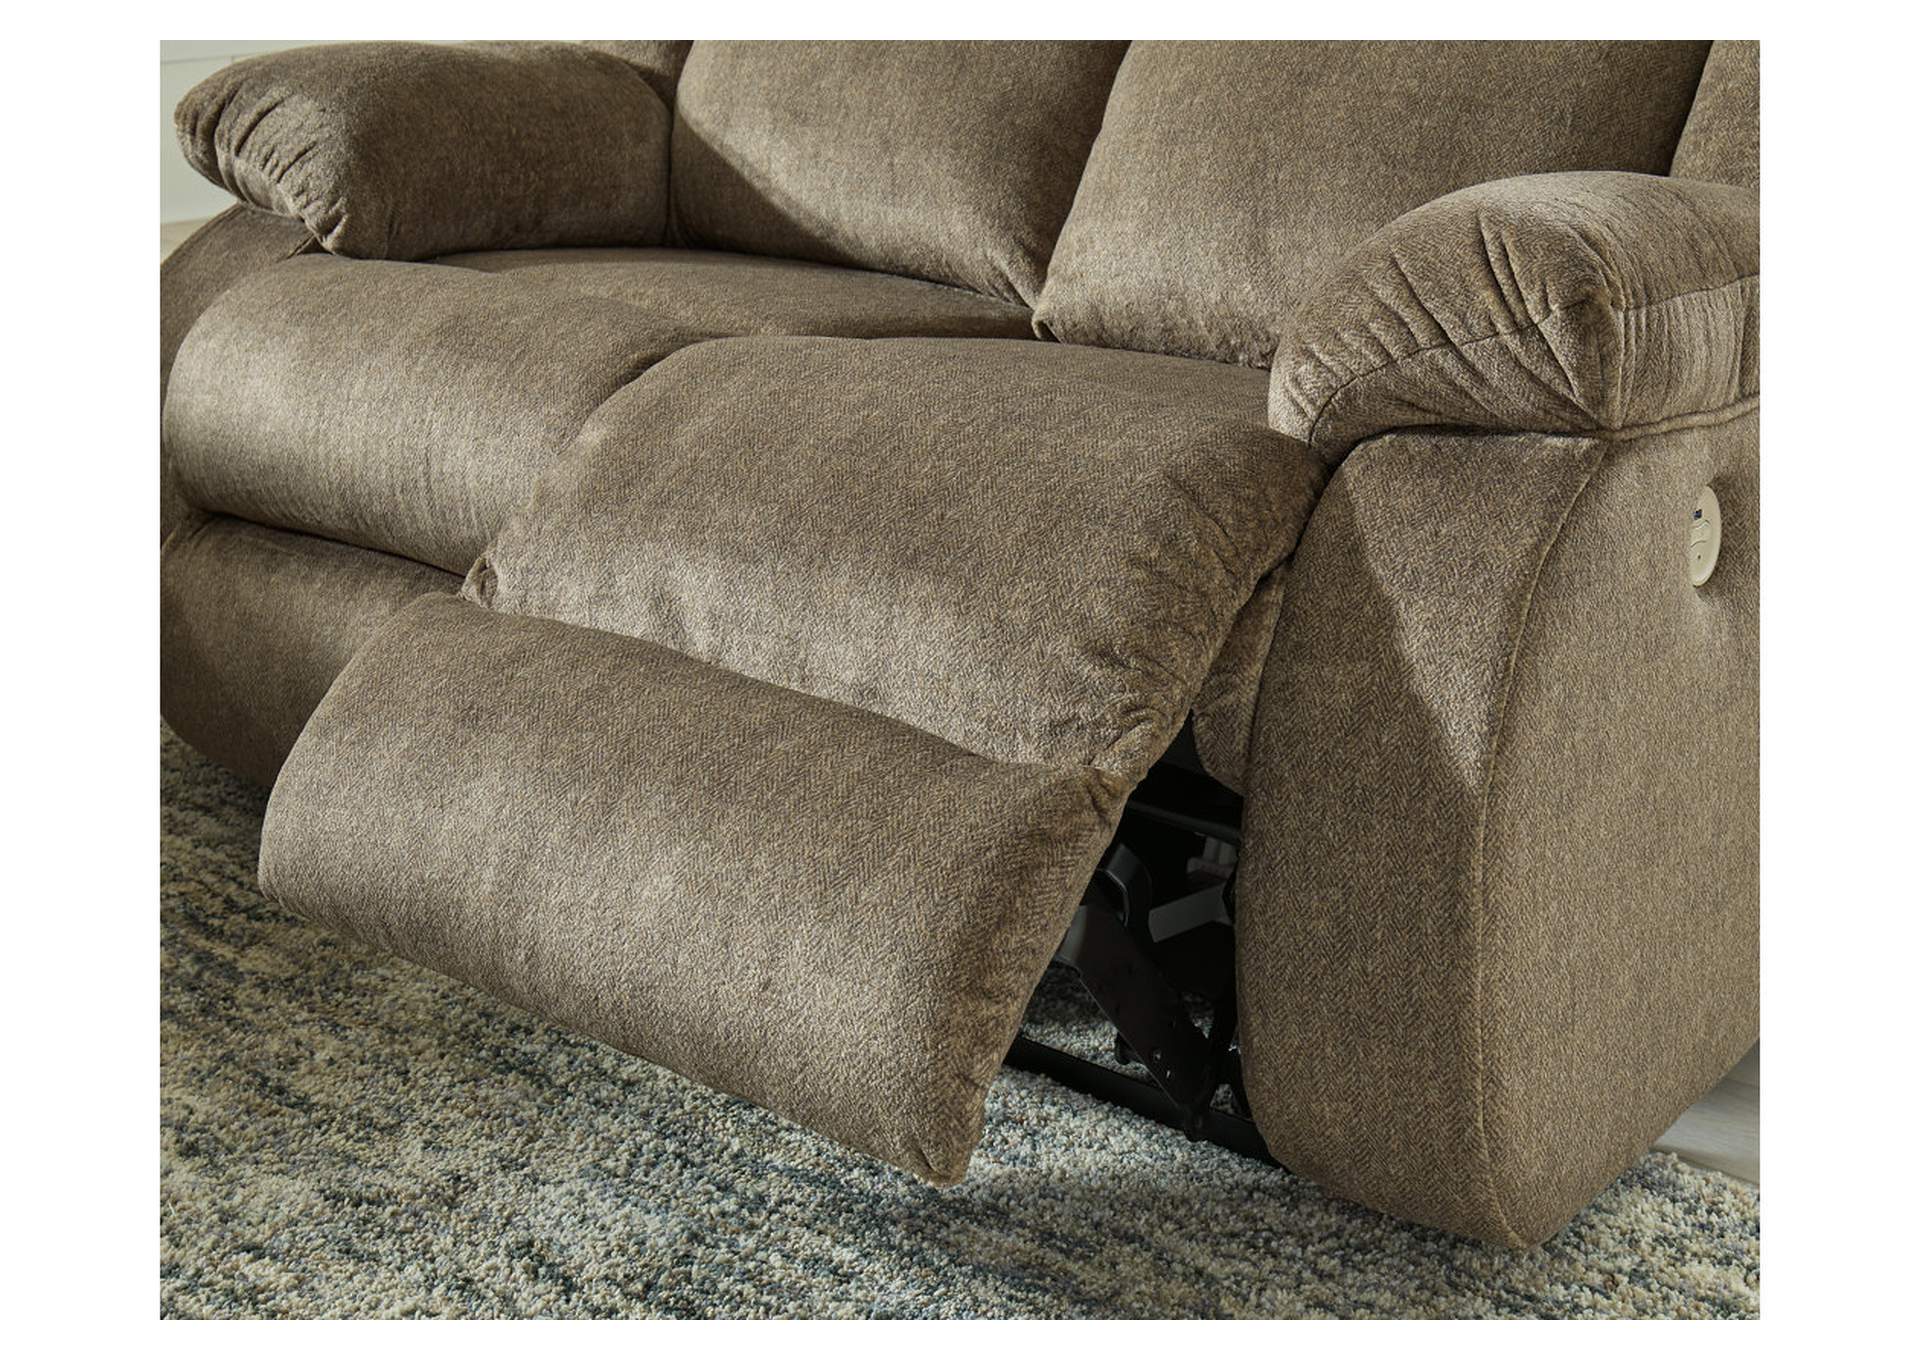 Burkner Power Reclining Sofa,Signature Design By Ashley